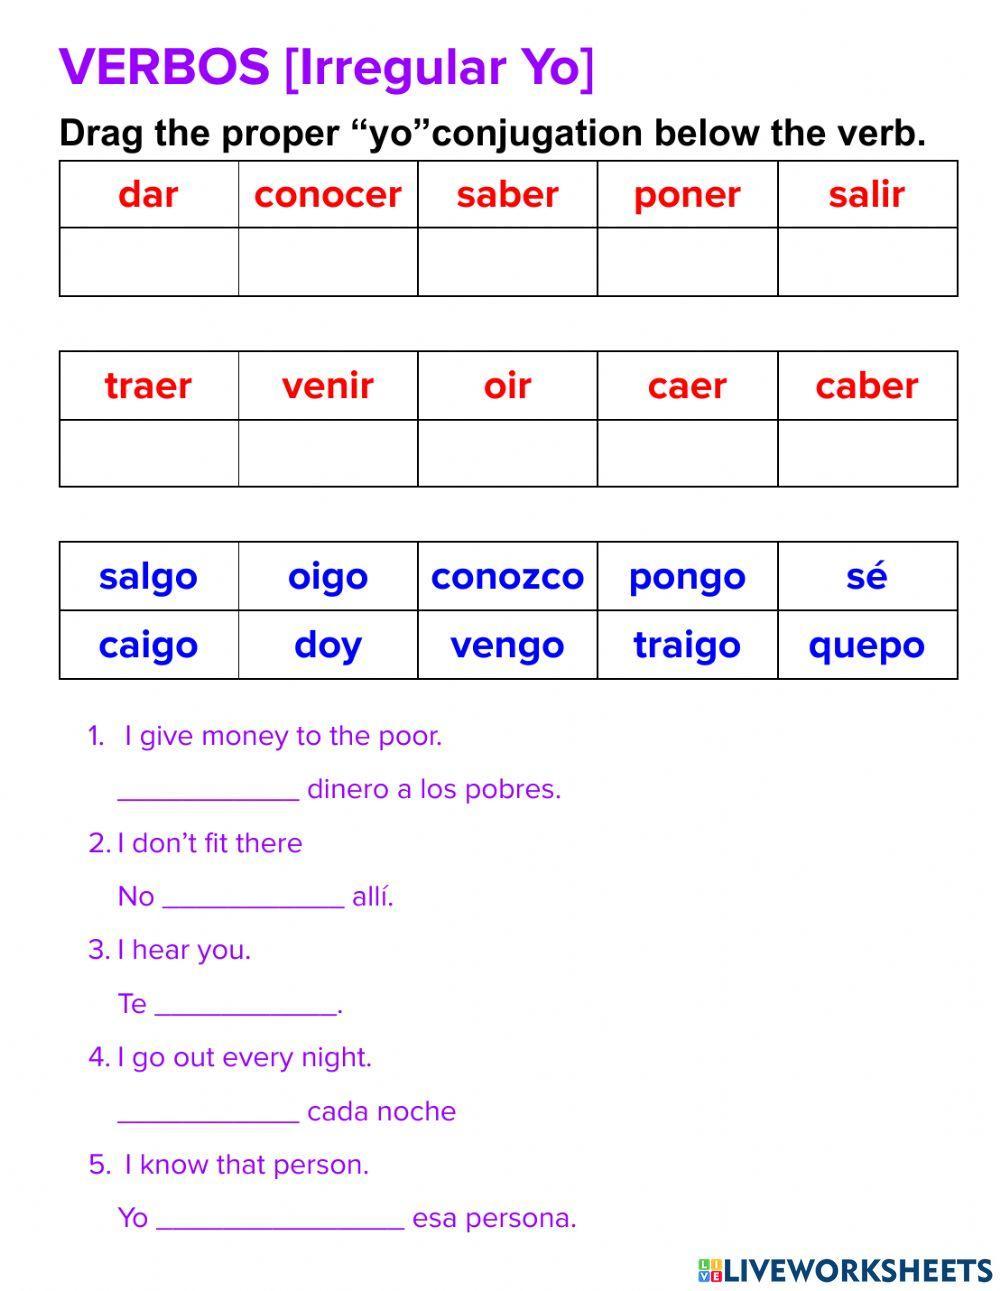 Irregular -yo- Verbs in Spanish